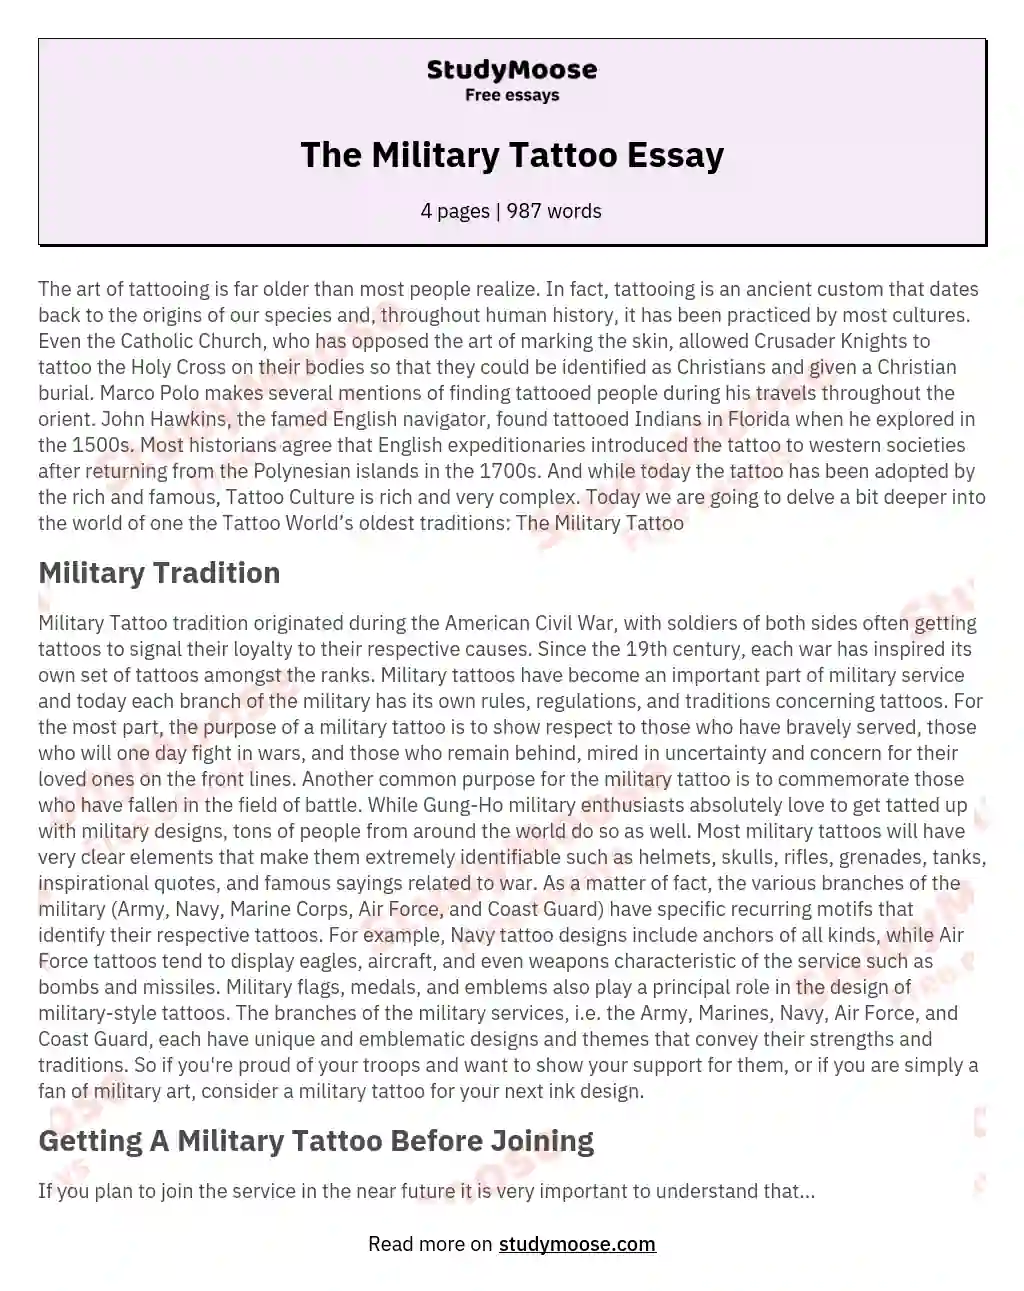 The Military Tattoo Essay essay